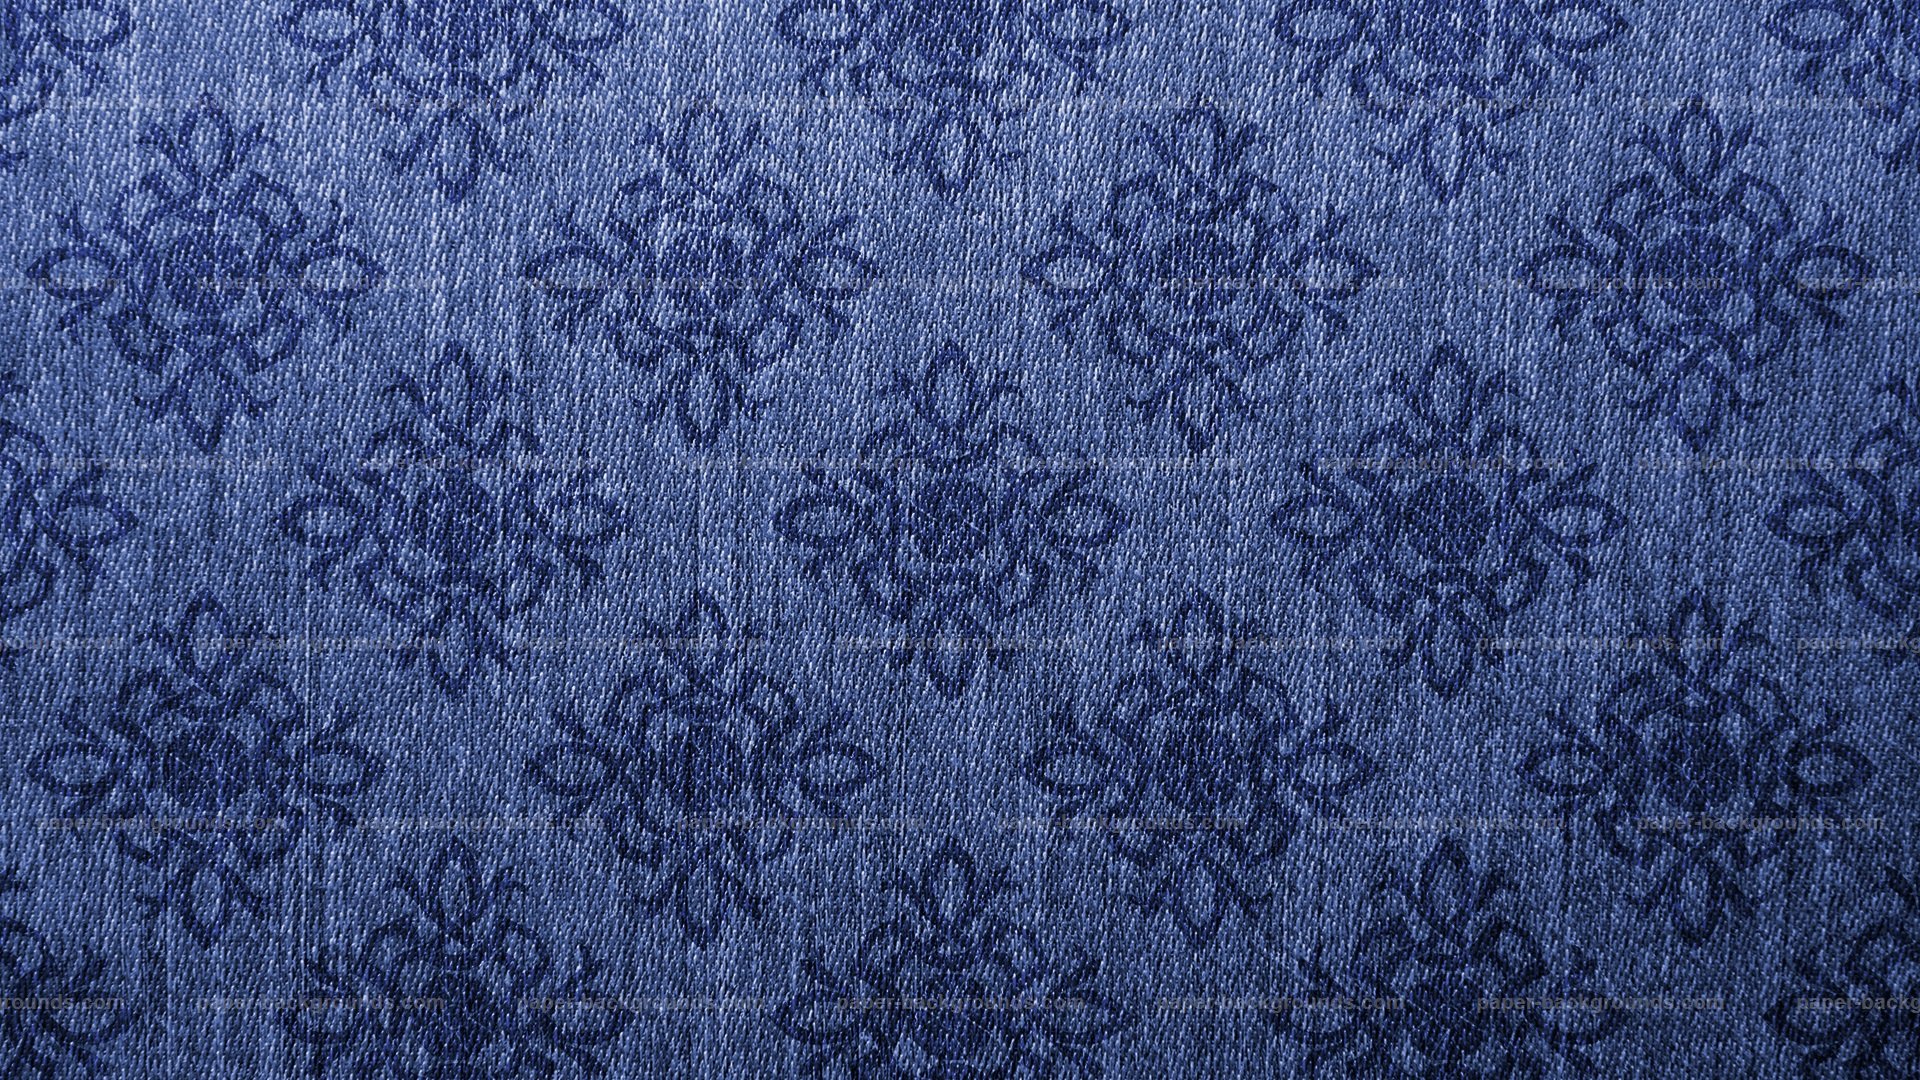 Blue Texture Background Hd wallpaper   809570